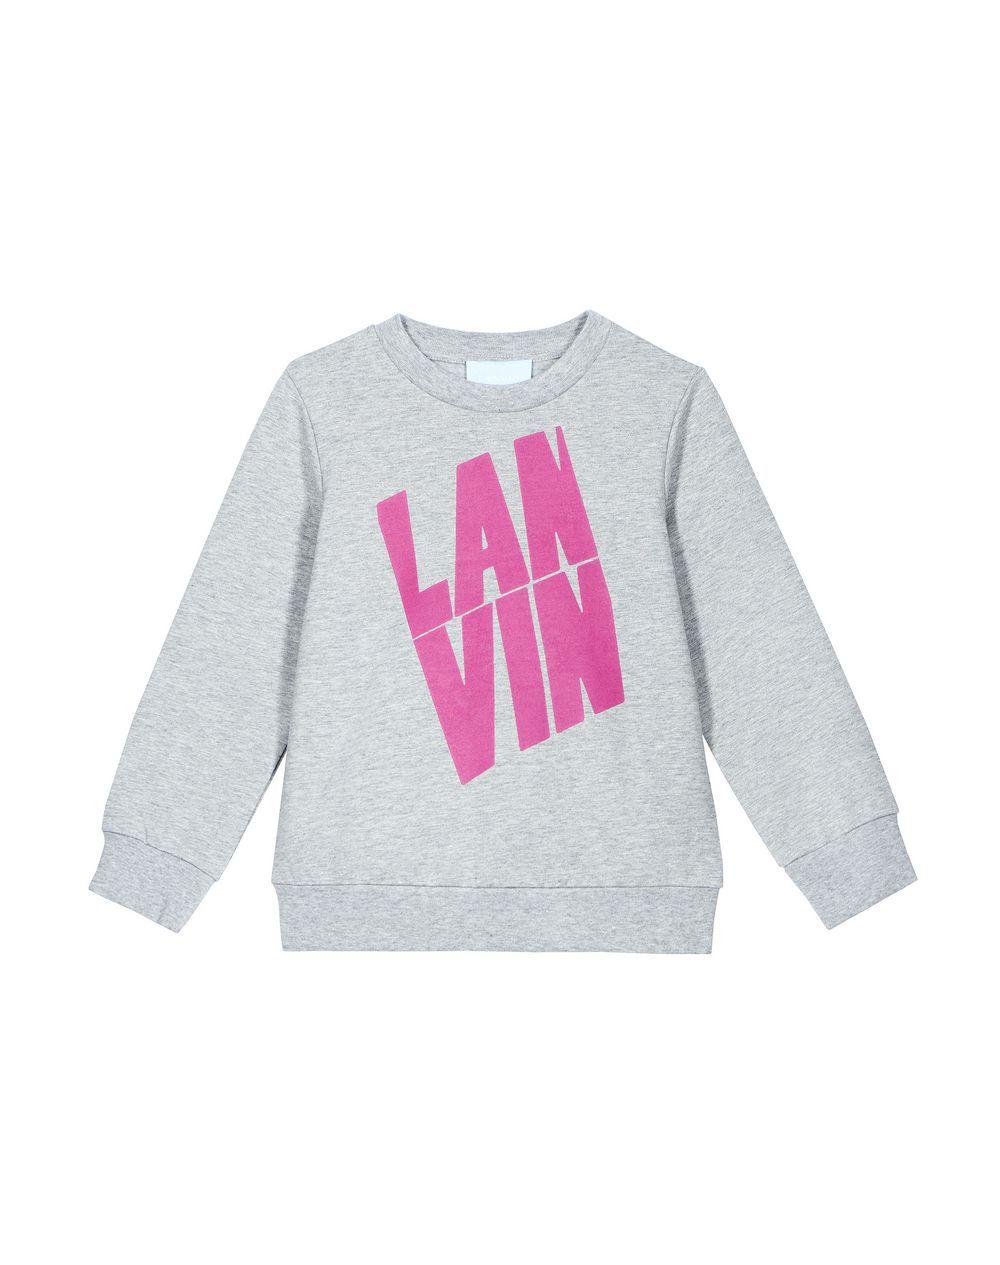 Lanvin Logo - Lanvin GRAY SWEATSHIRT WITH LANVIN LOGO, Top Childrenswear